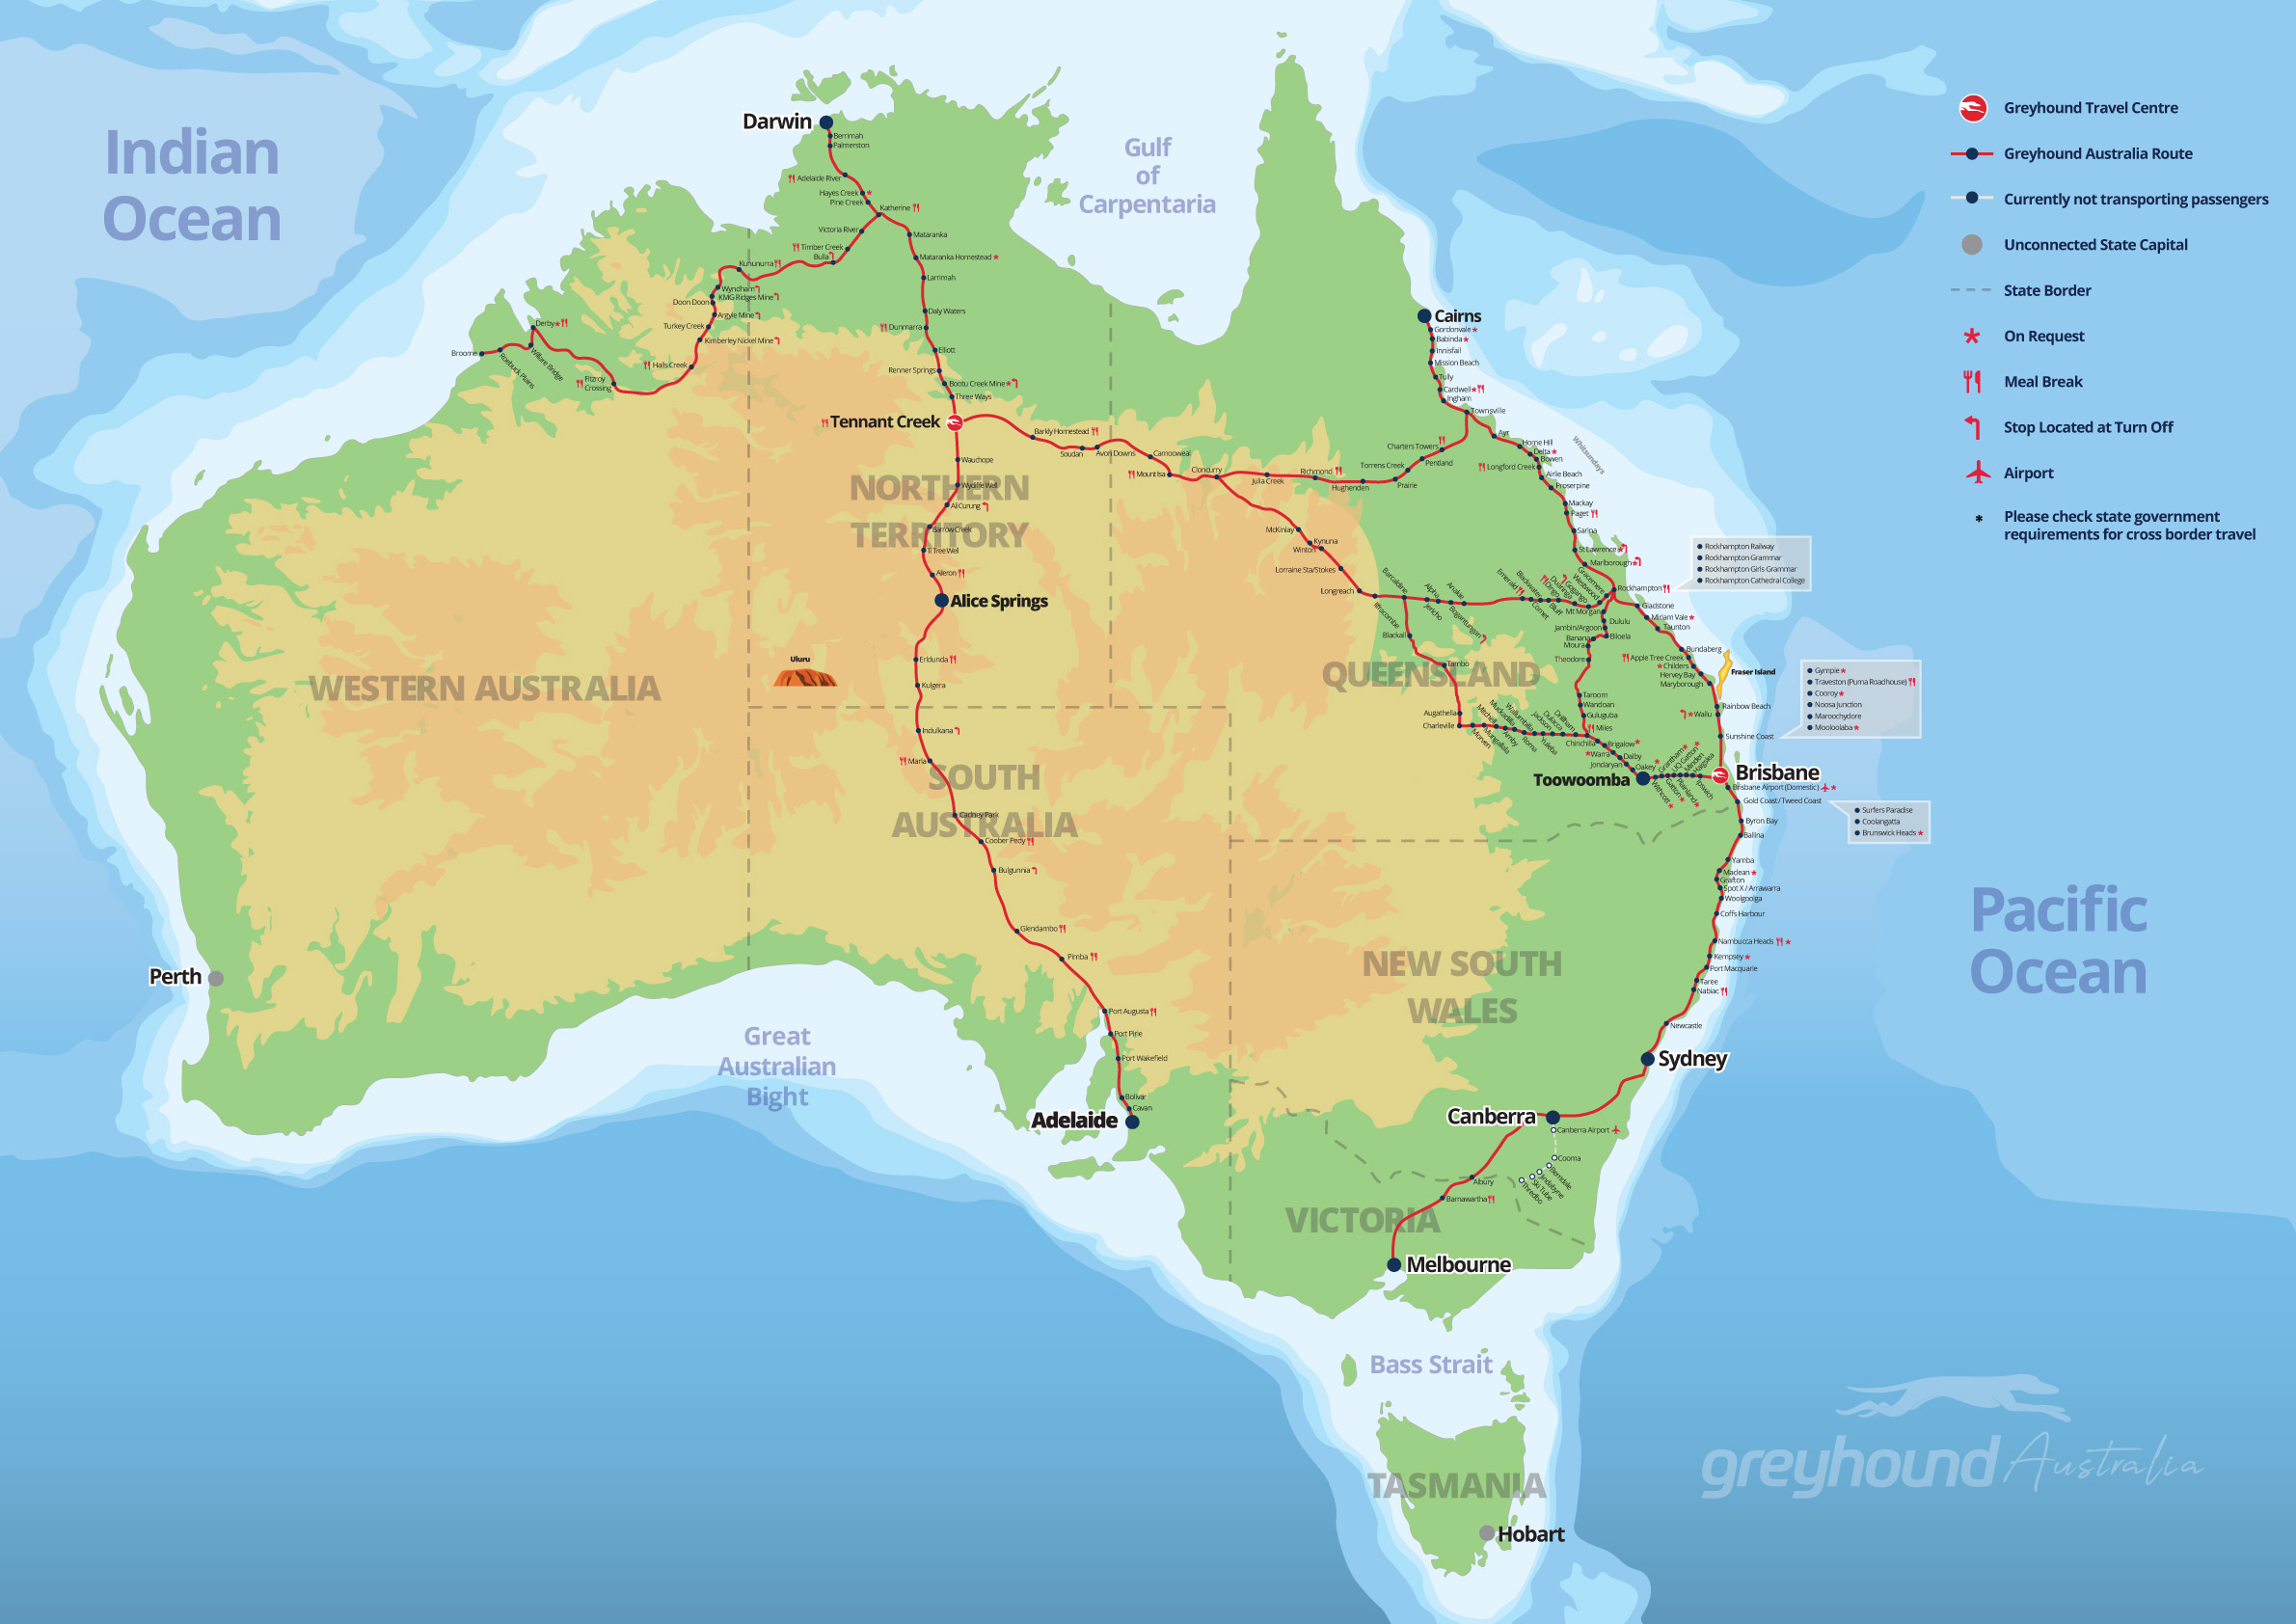 Greyhound Australia Network Map - effective 29 April 2022